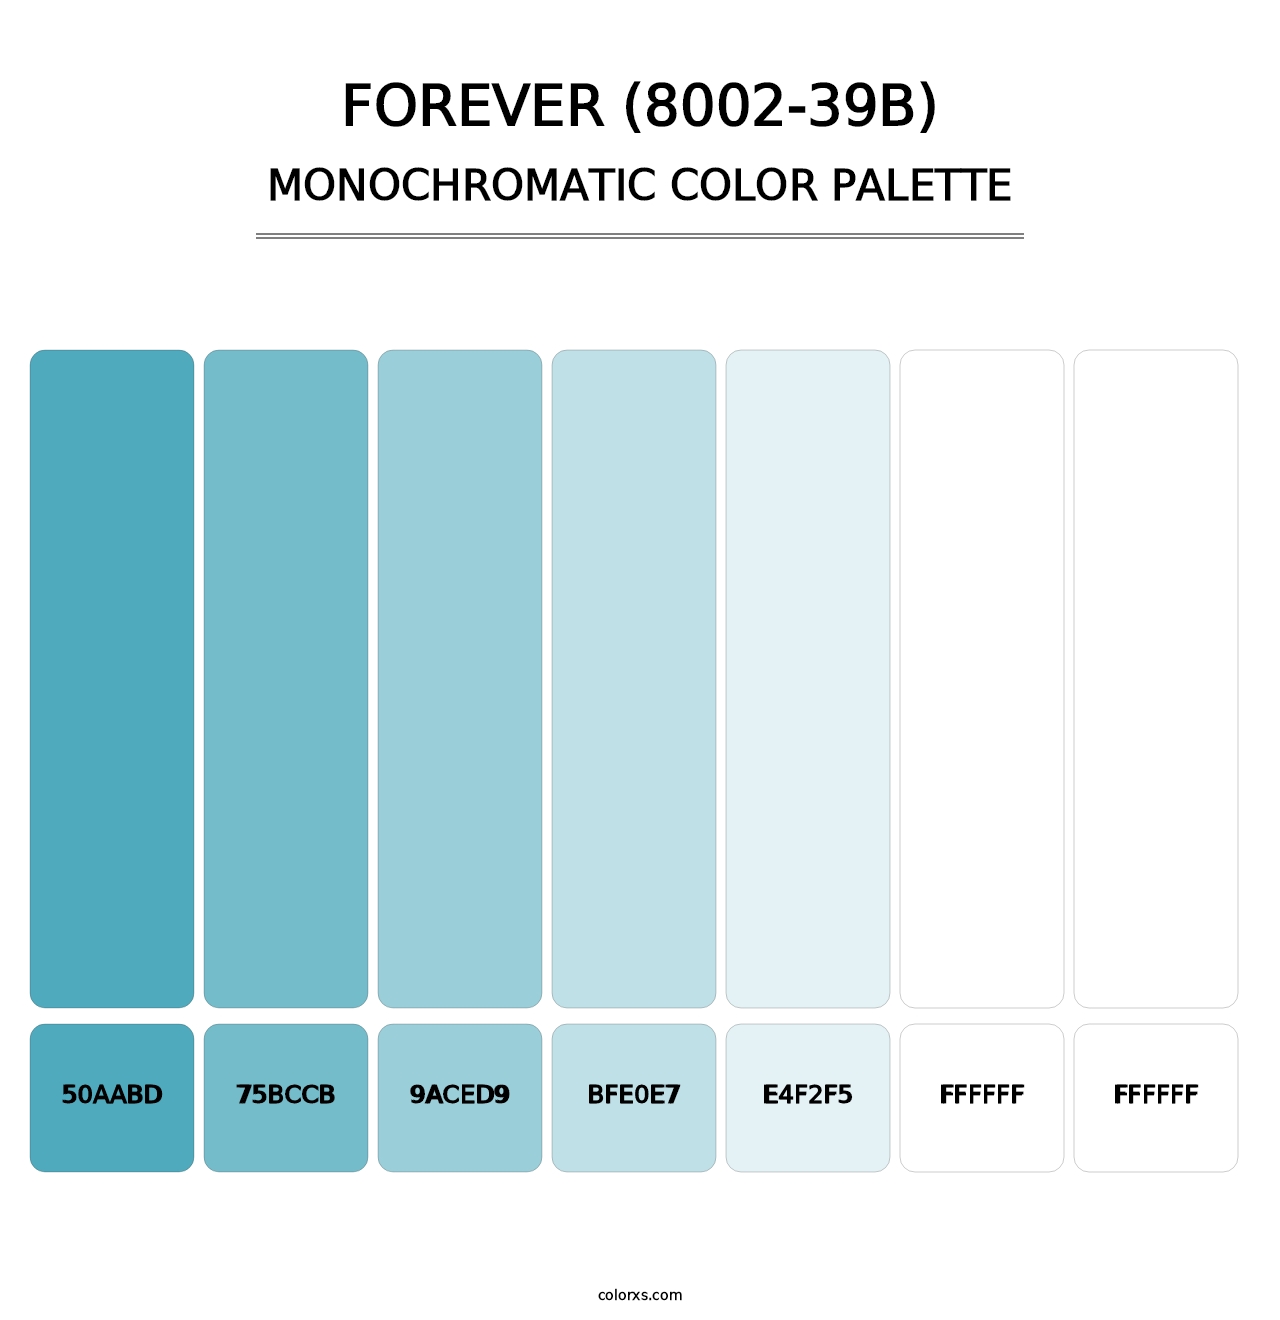 Forever (8002-39B) - Monochromatic Color Palette